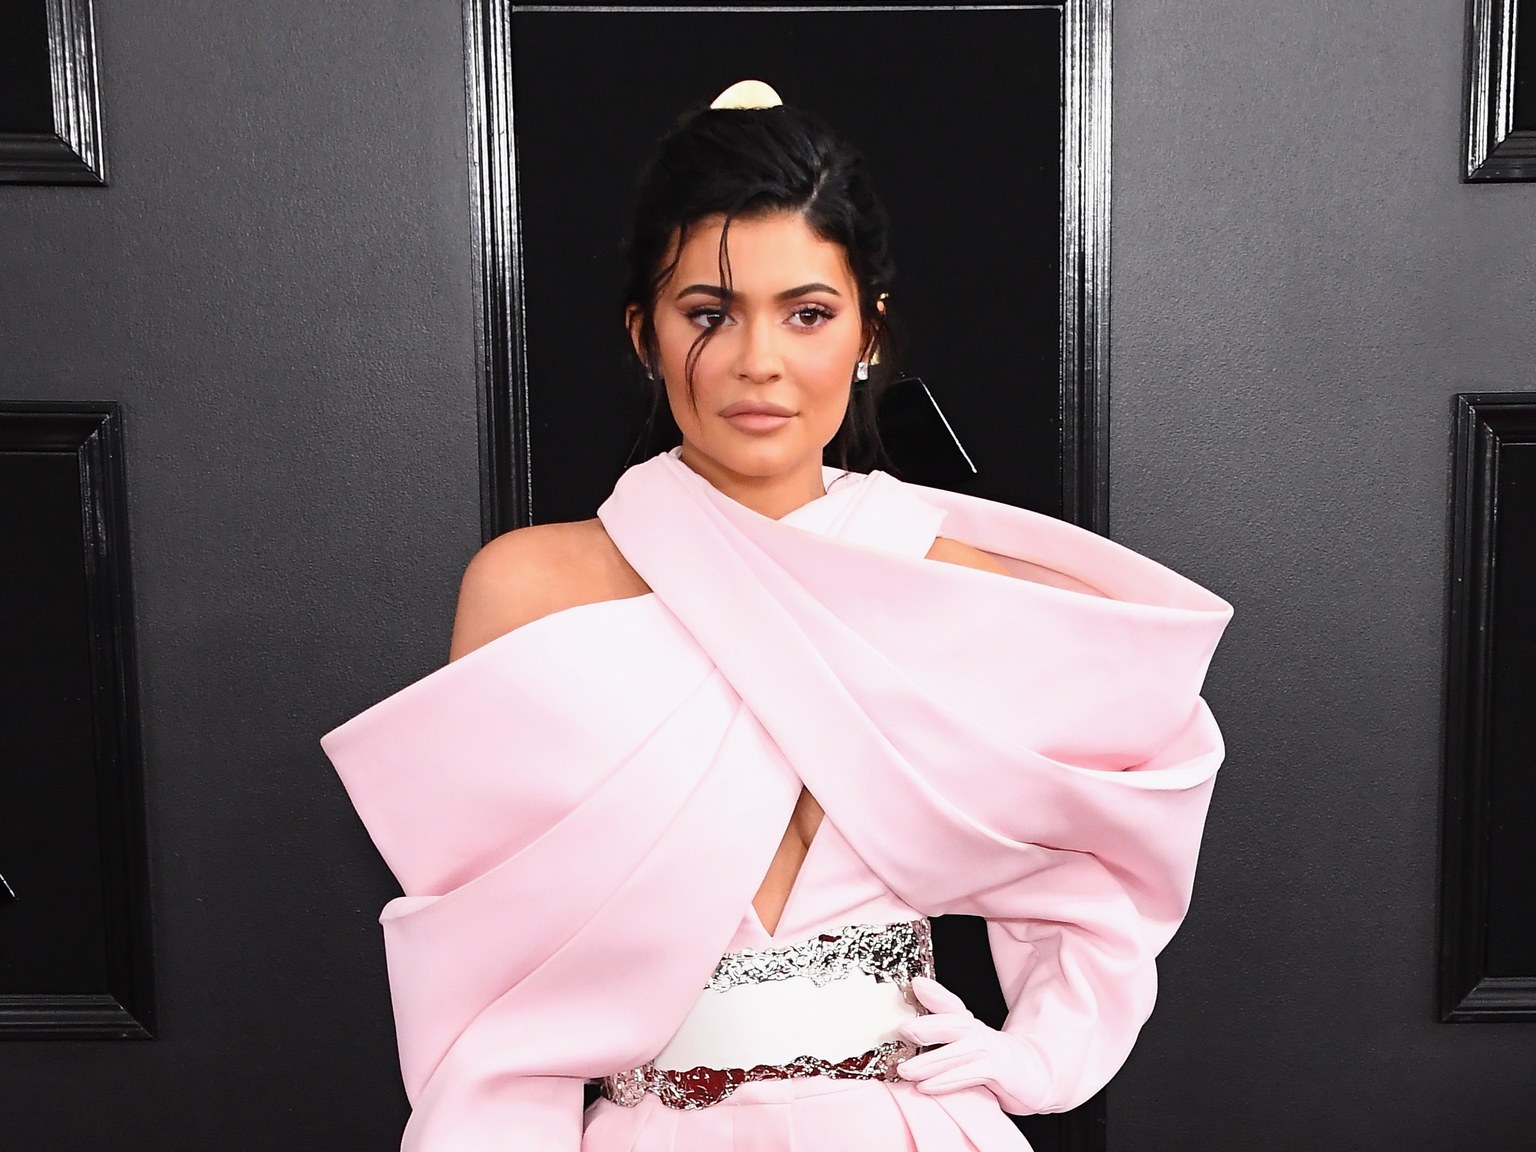 Kylie Jenner makes $1 million per paid Instagram post, Hopper HQ says